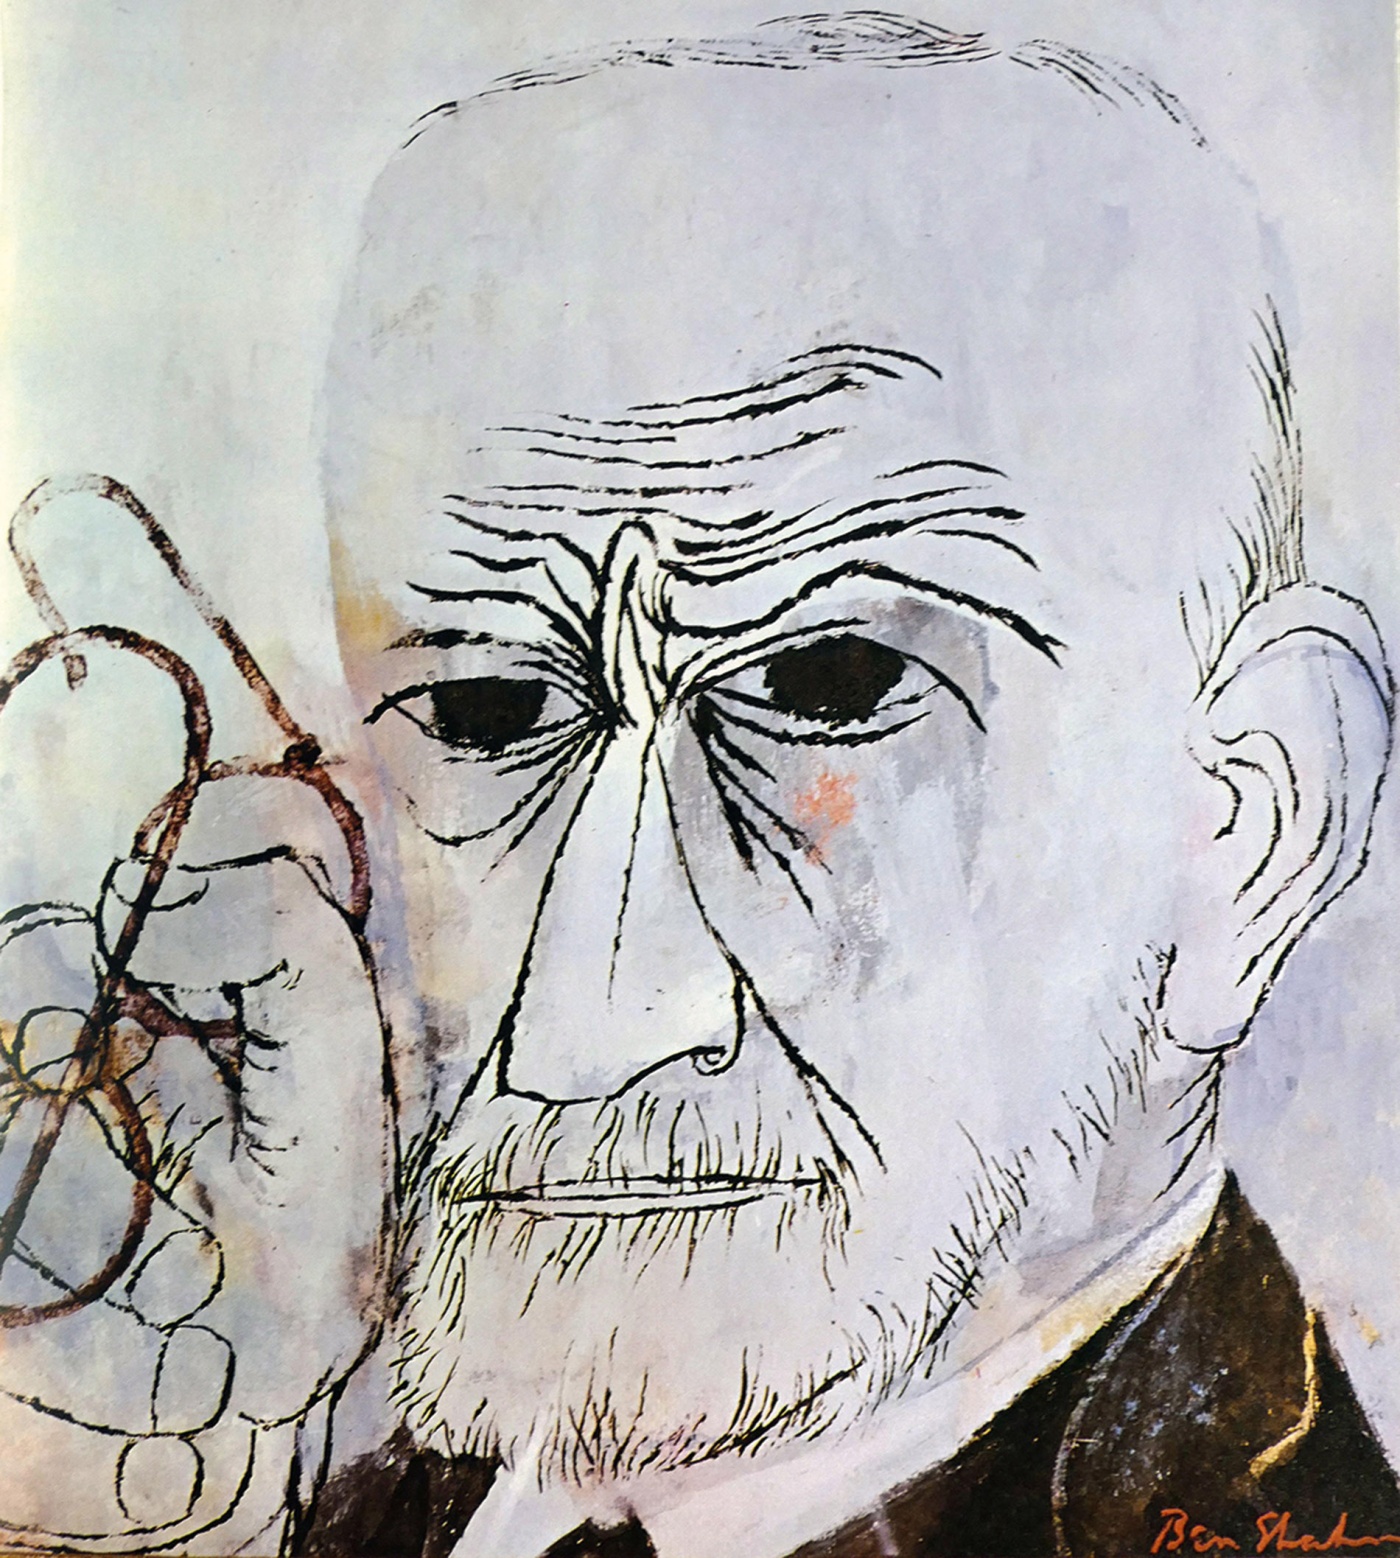 Illustration of Sigmund Freud